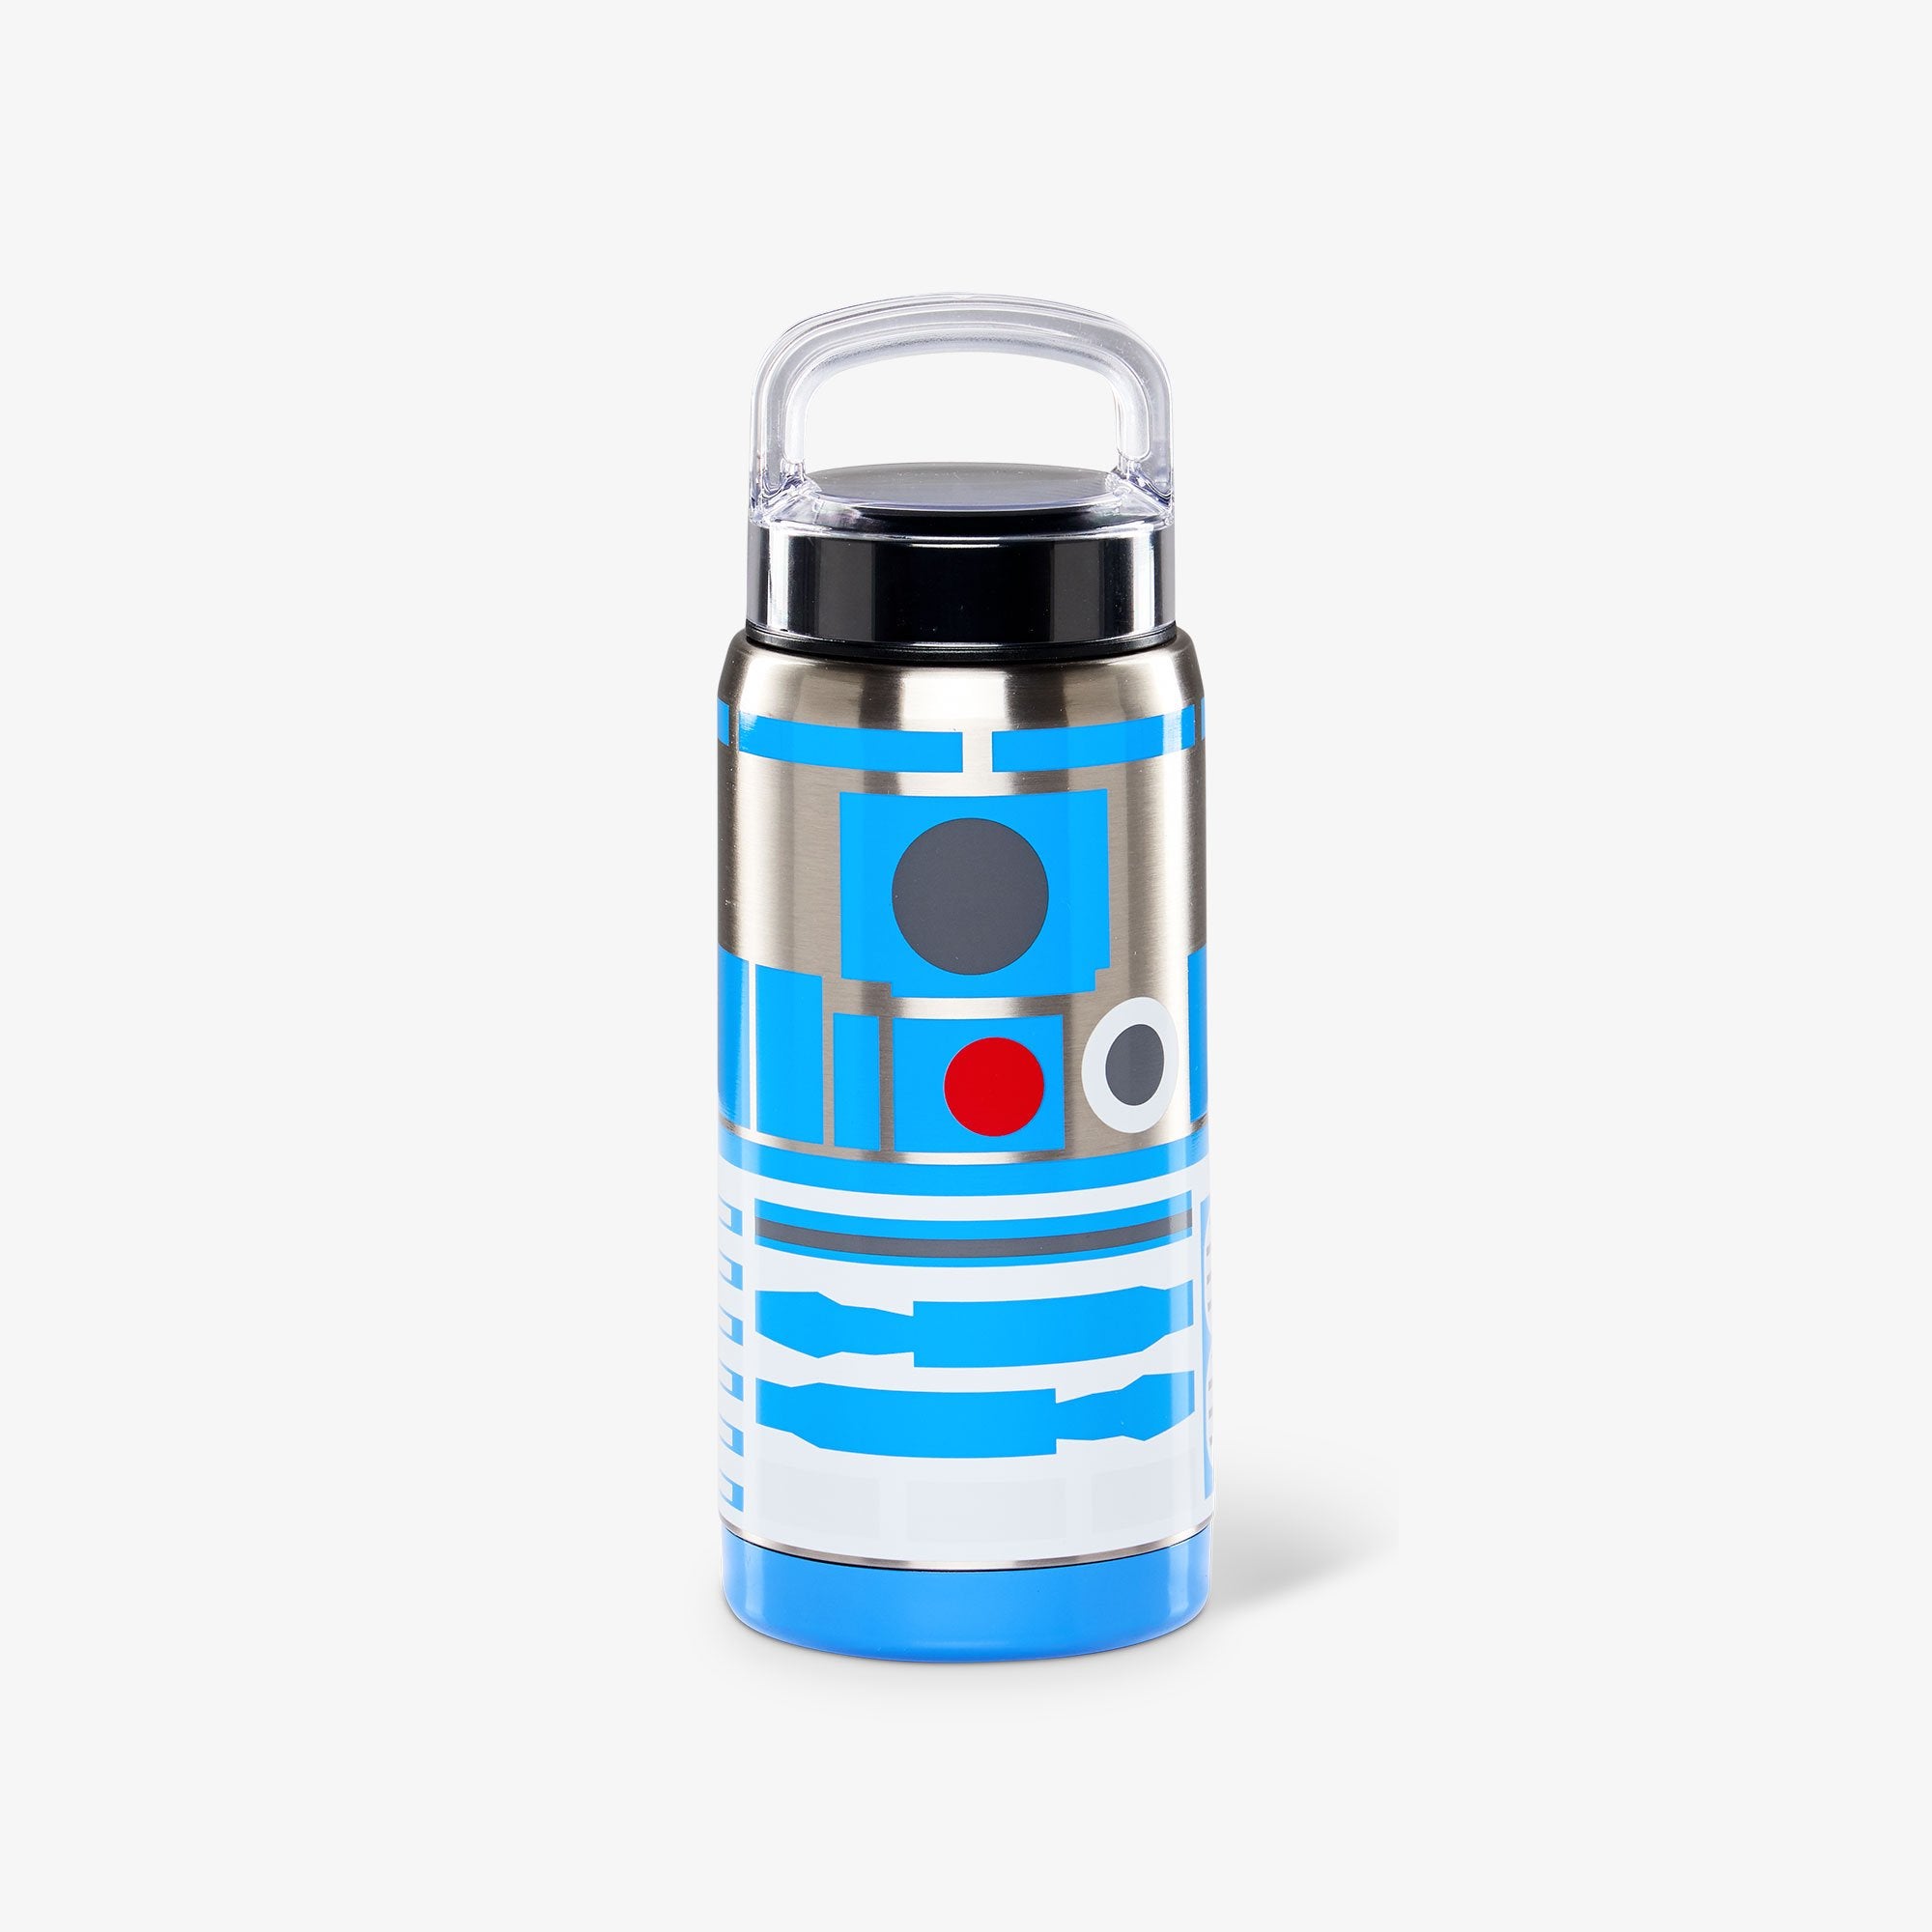 Star Wars R2-D2 5-Piece Tea Set